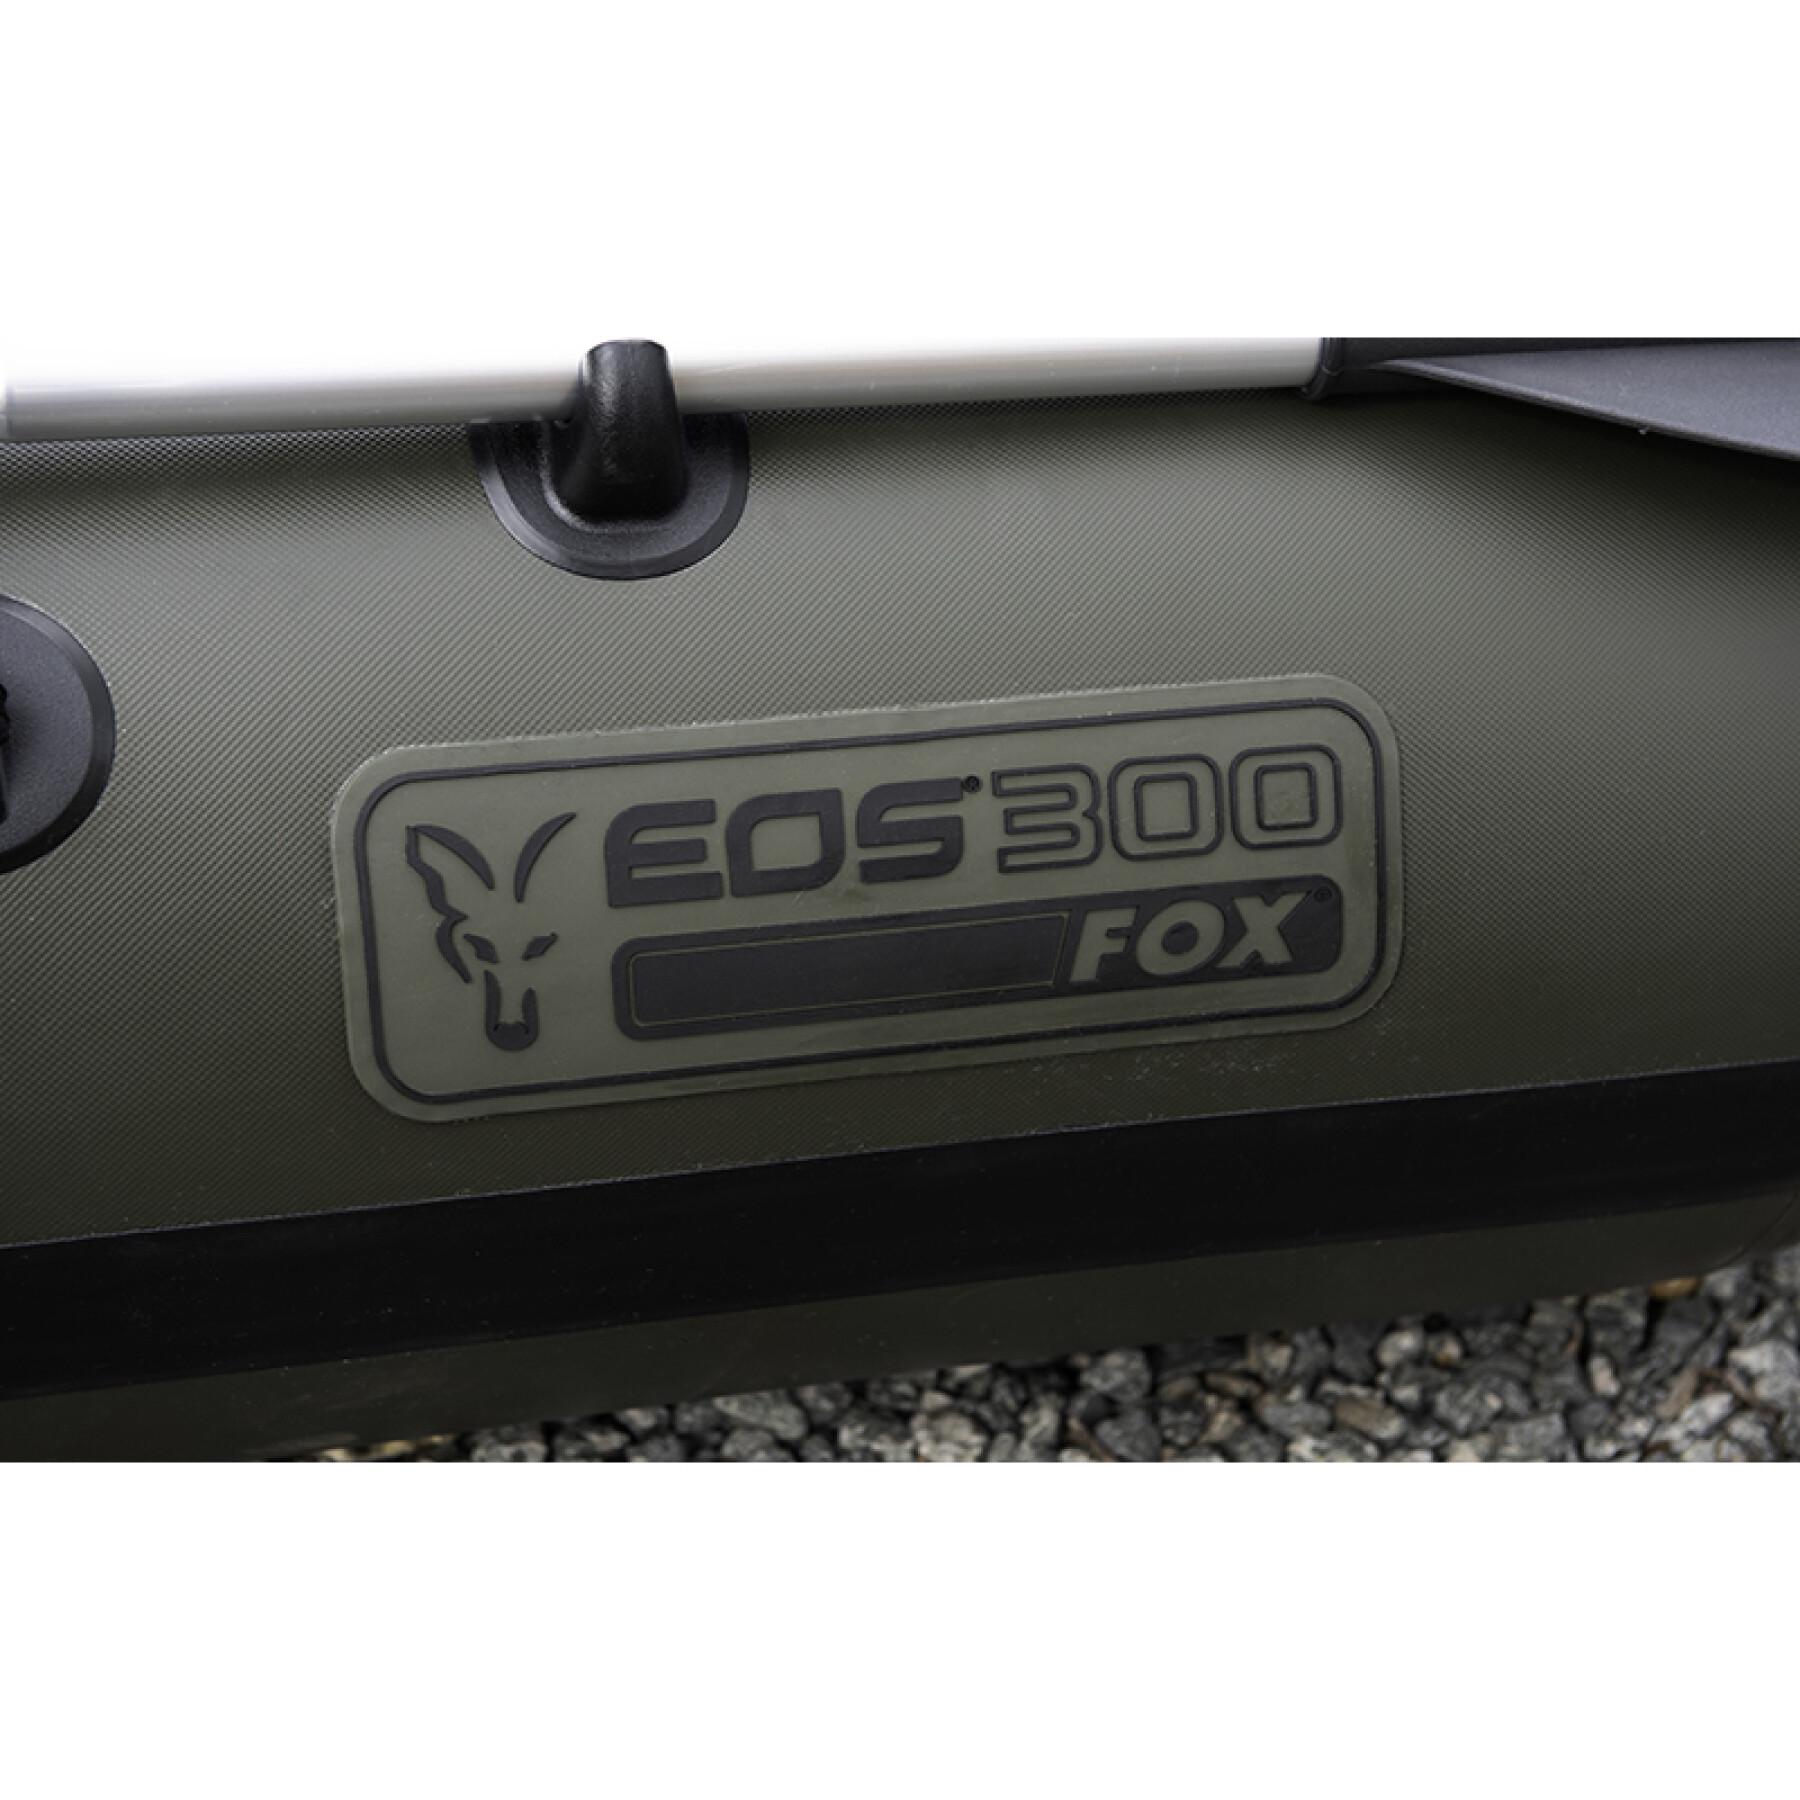 Opblaasbare boot Fox EOS 300